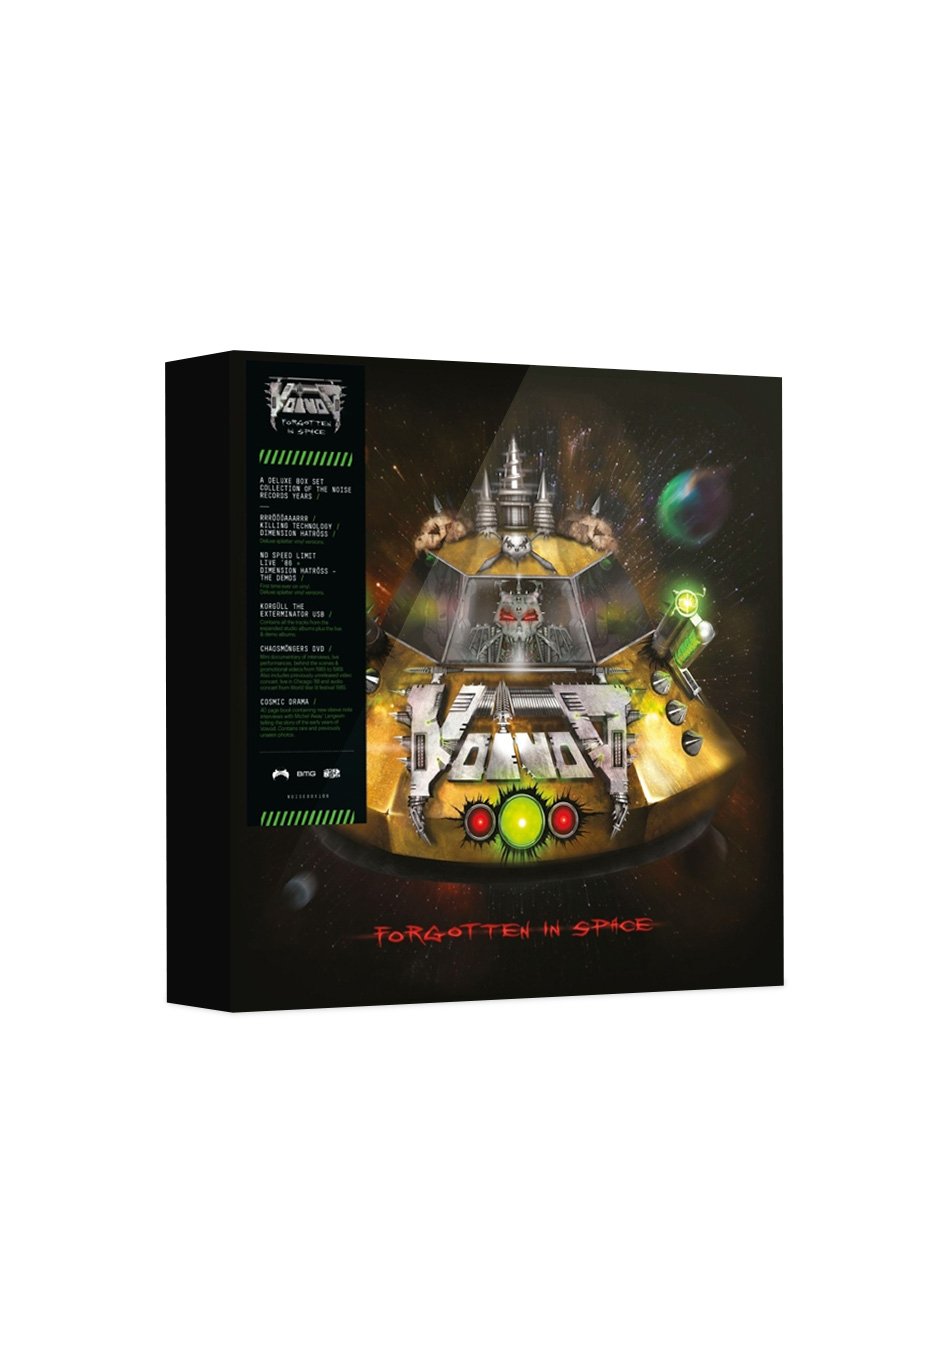 Voivod - Forgotten In Space - 7 Vinyl Box